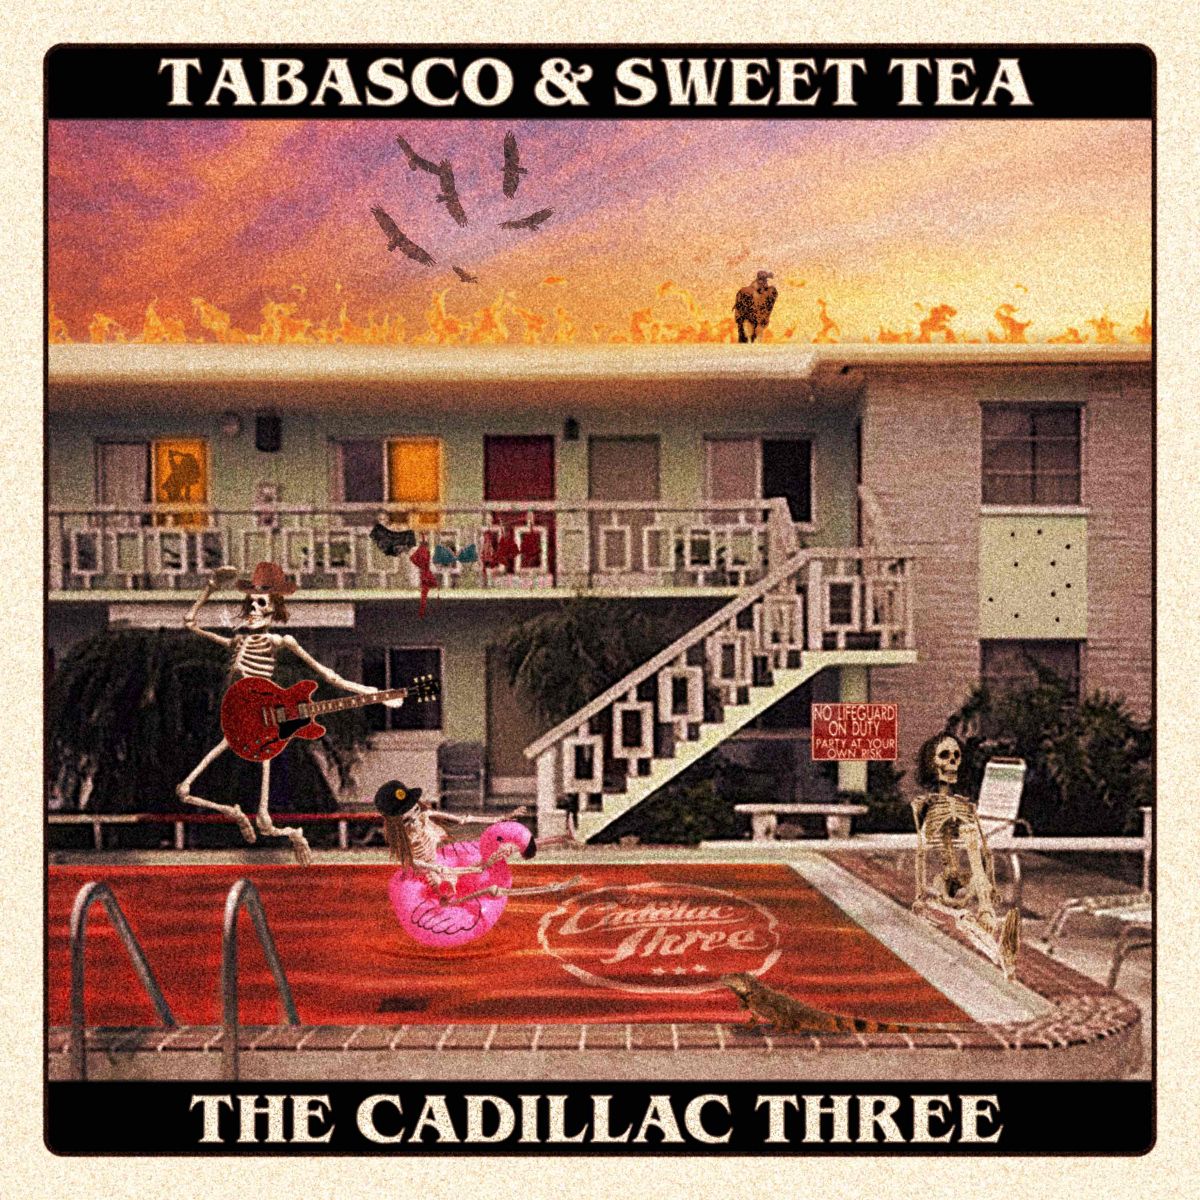 The Cadillac Three announce brand new album 'Tabasco & Sweet Tea'